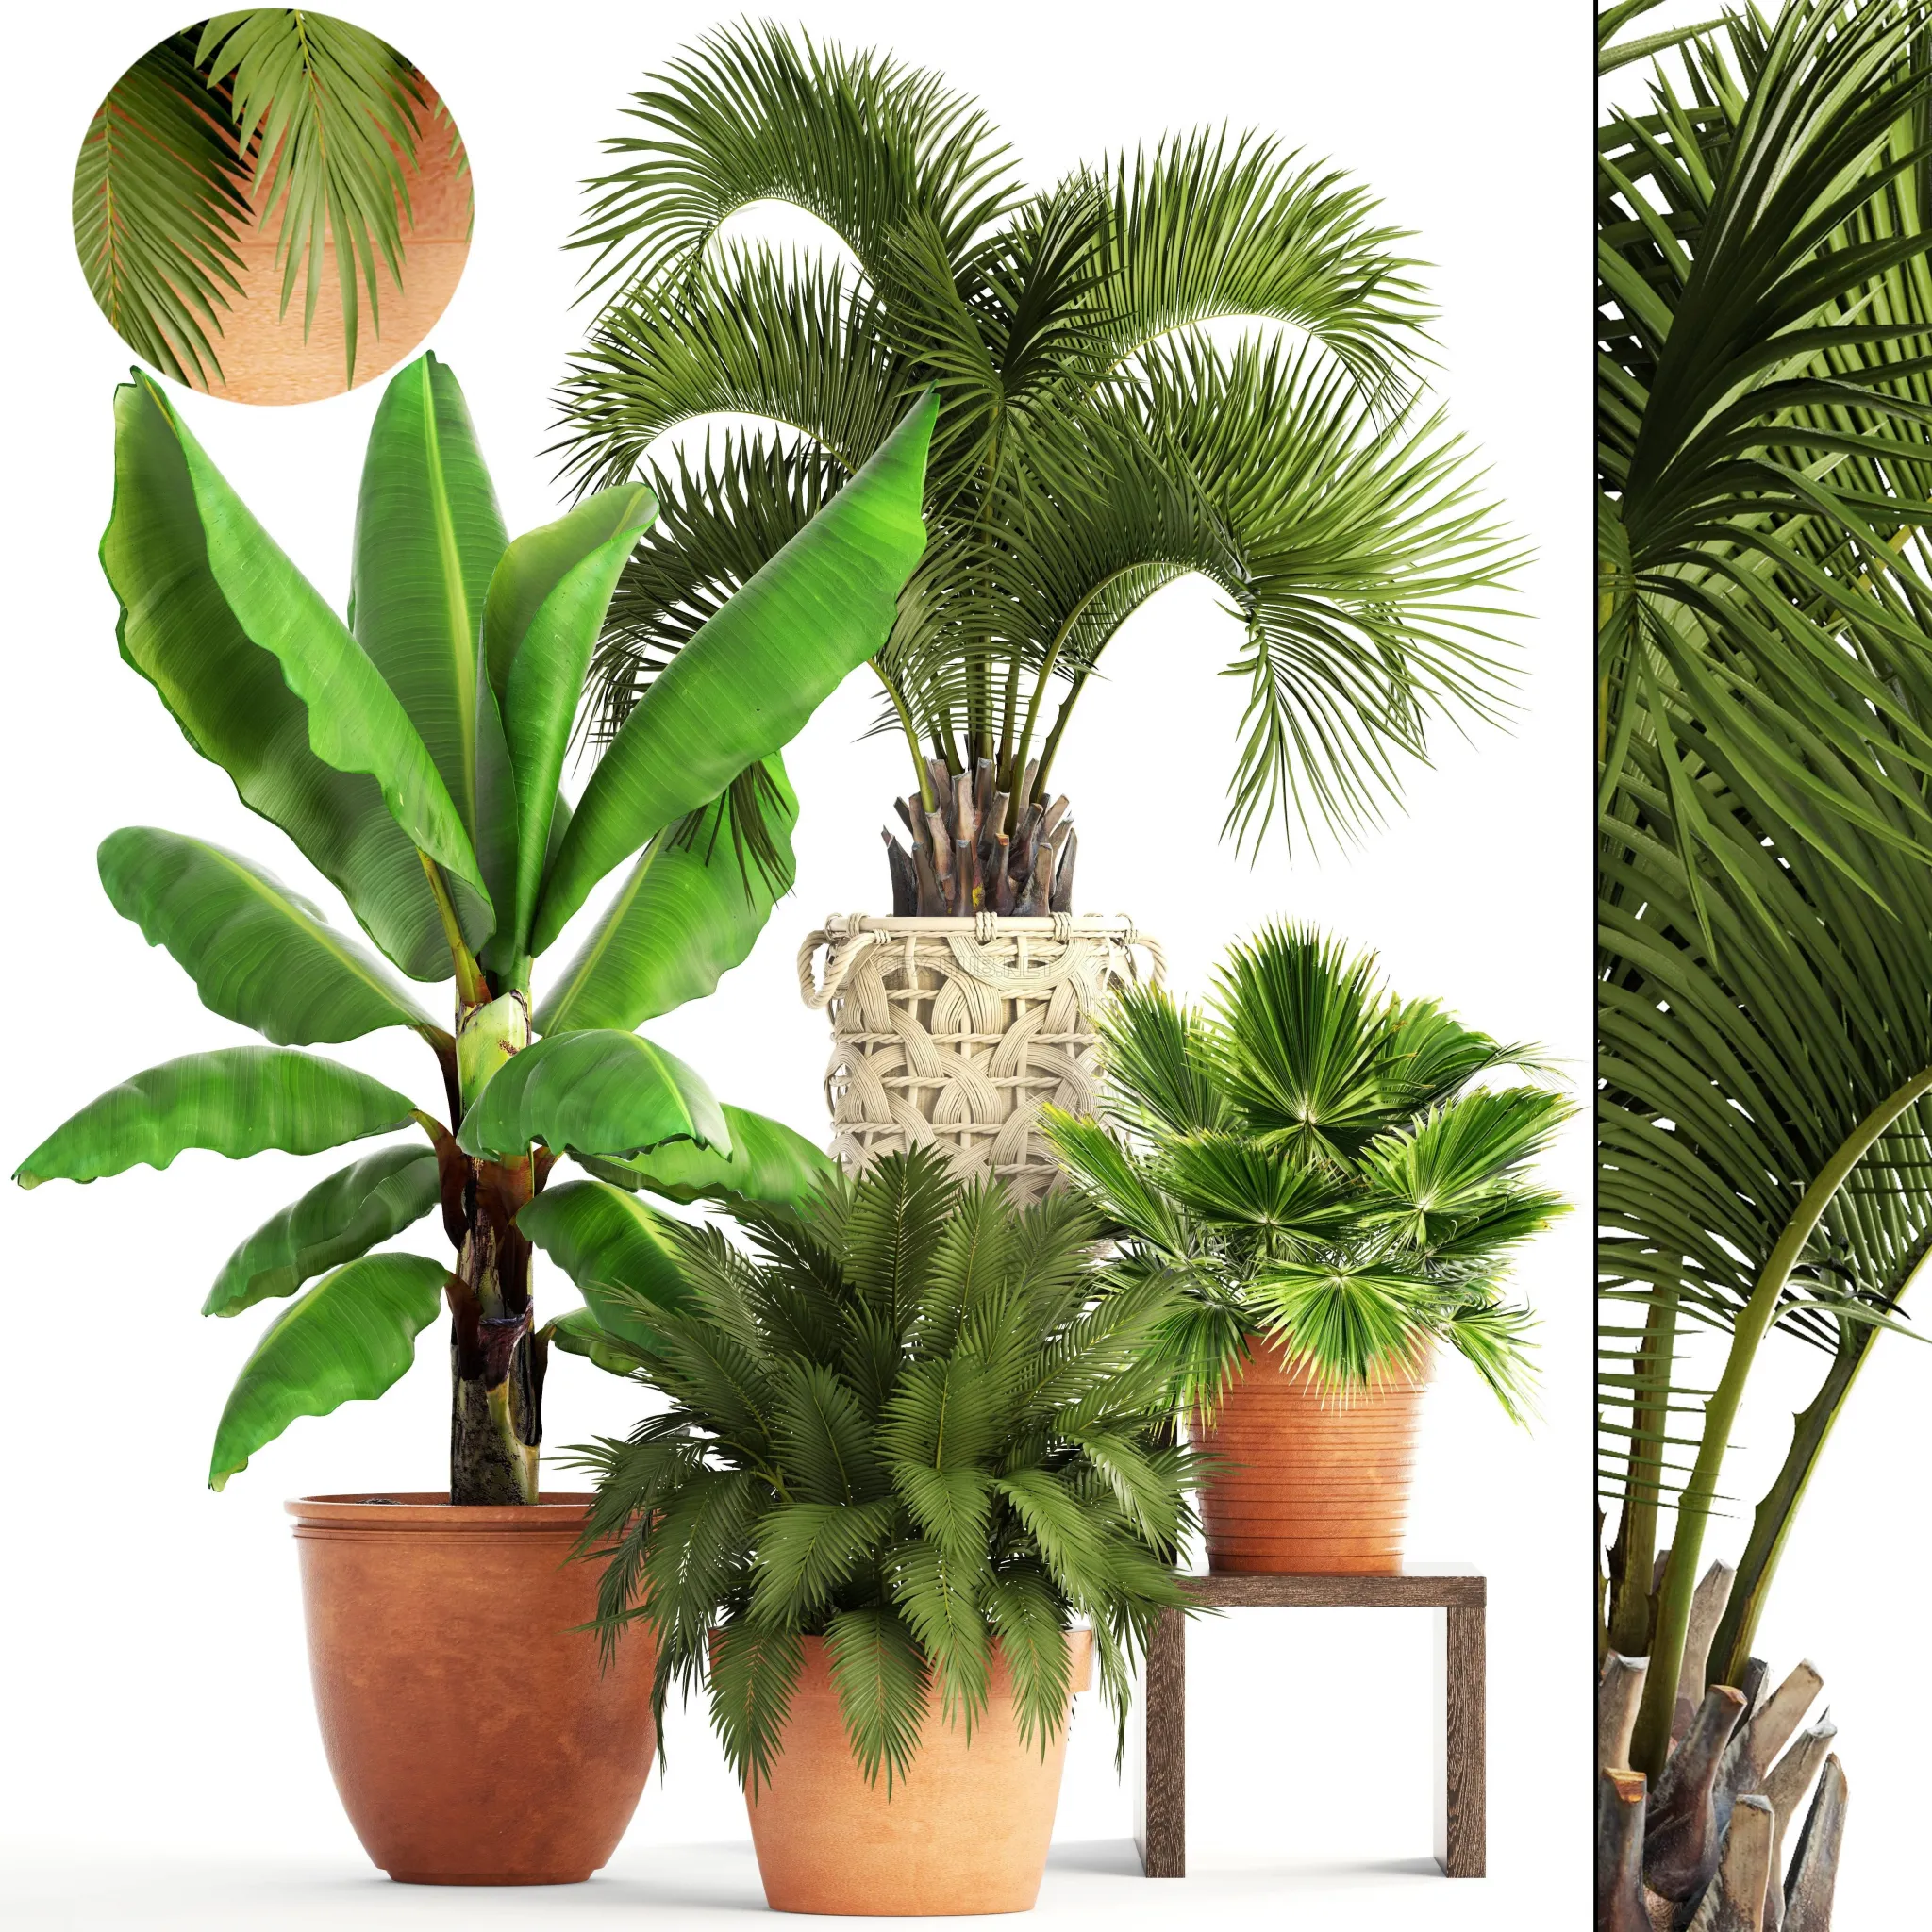 3D Collection plantsby deckorator4 – 200121